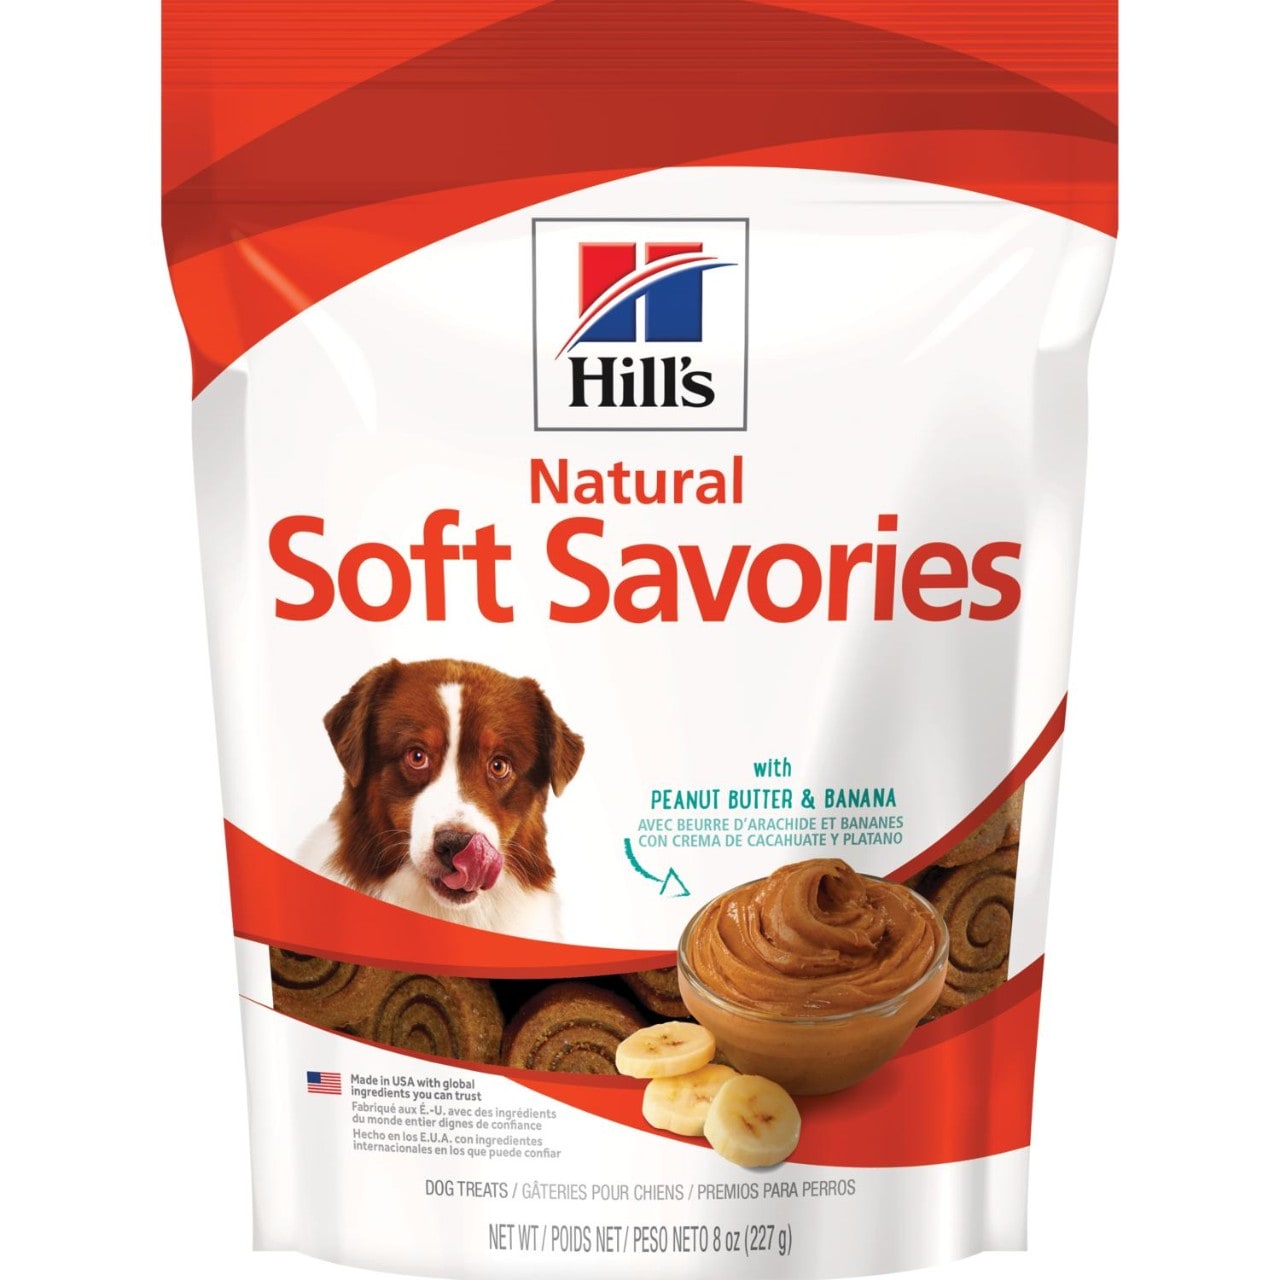 Hill's Natural | Premios para perros Soft Savories Peanut Butter & Banana de crema de cacahuate y plátano